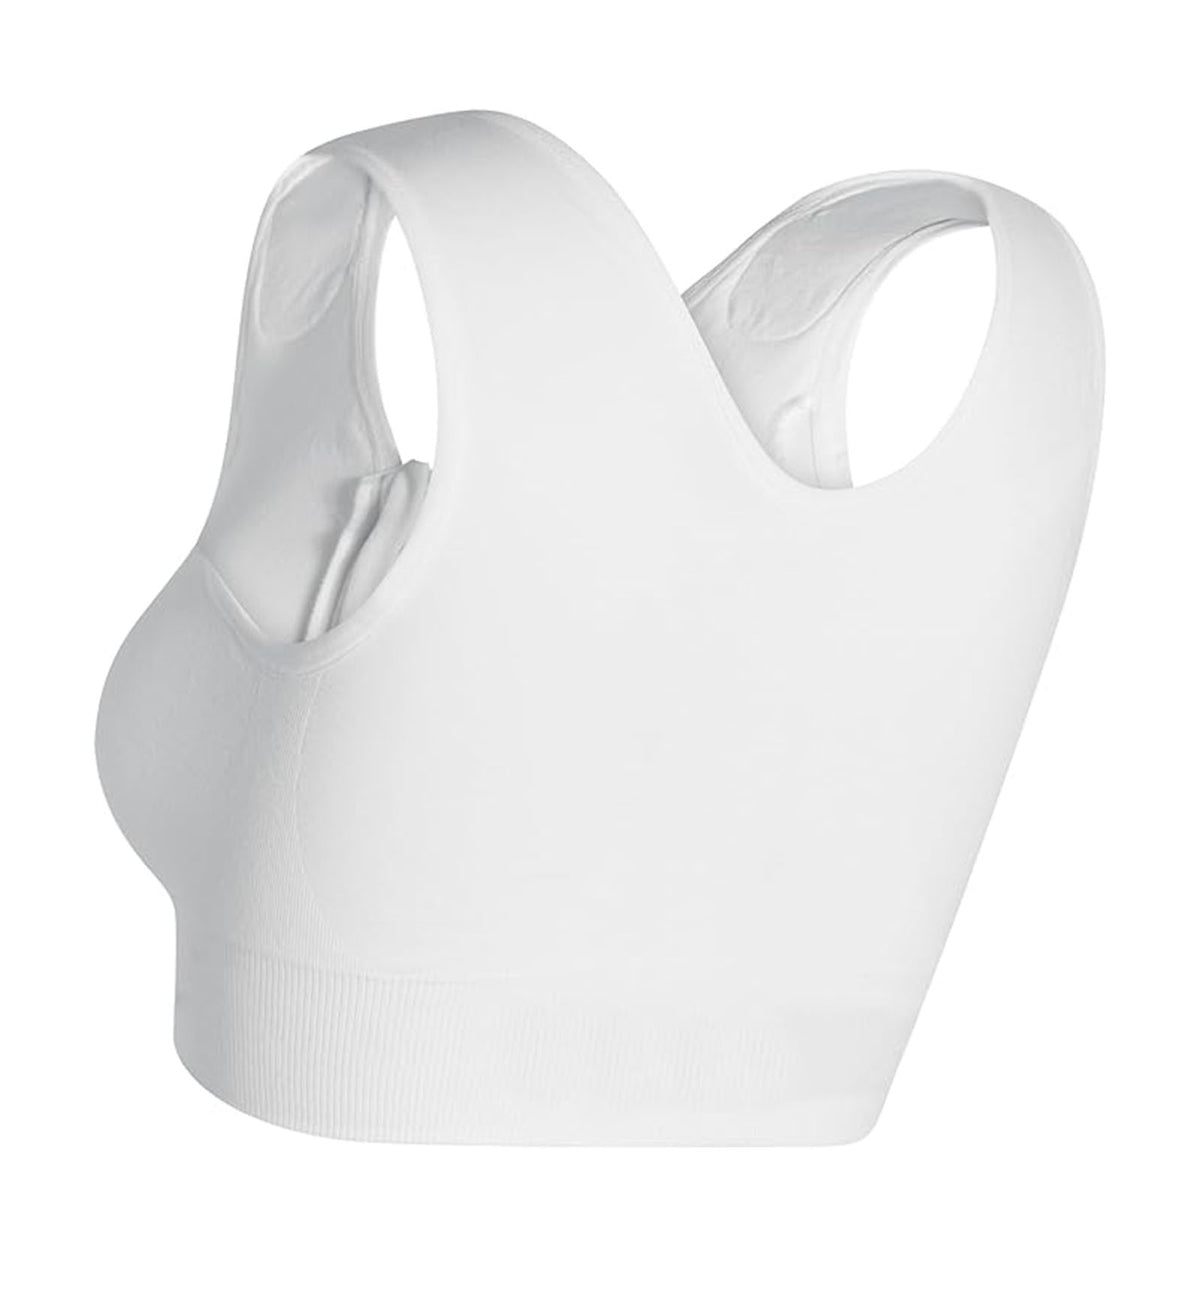 Carefix Sophia Front Close Post-Op Compression Surgical Vest (3342),Small,White - White,Small